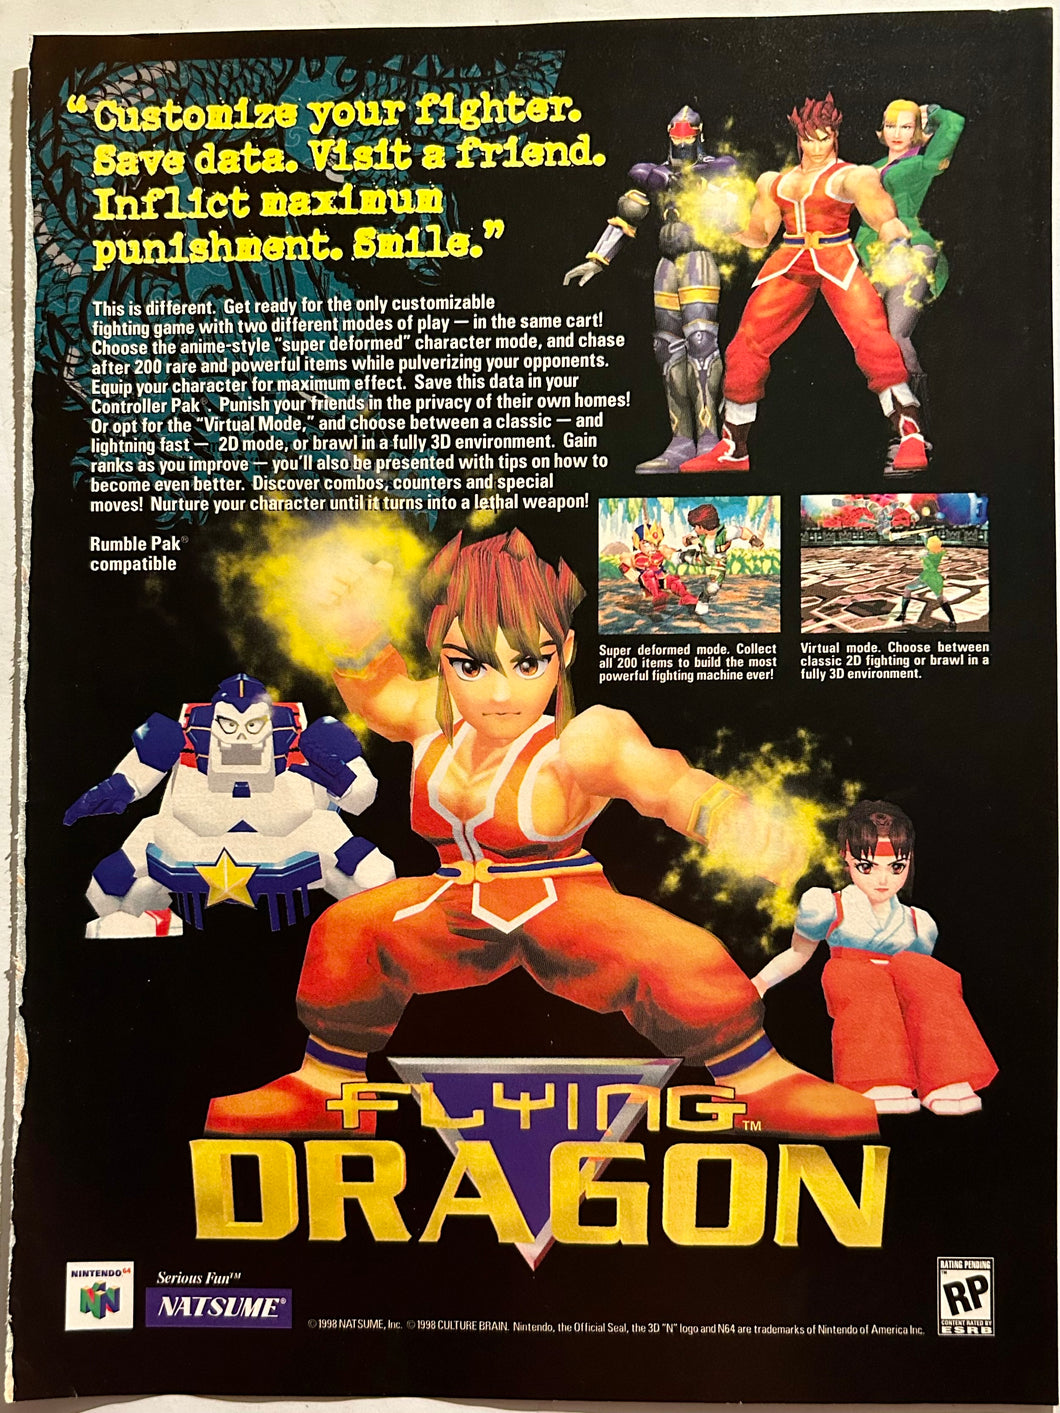 Flying Dragon - N64 - Original Vintage Advertisement - Print Ads - Laminated A4 Poster